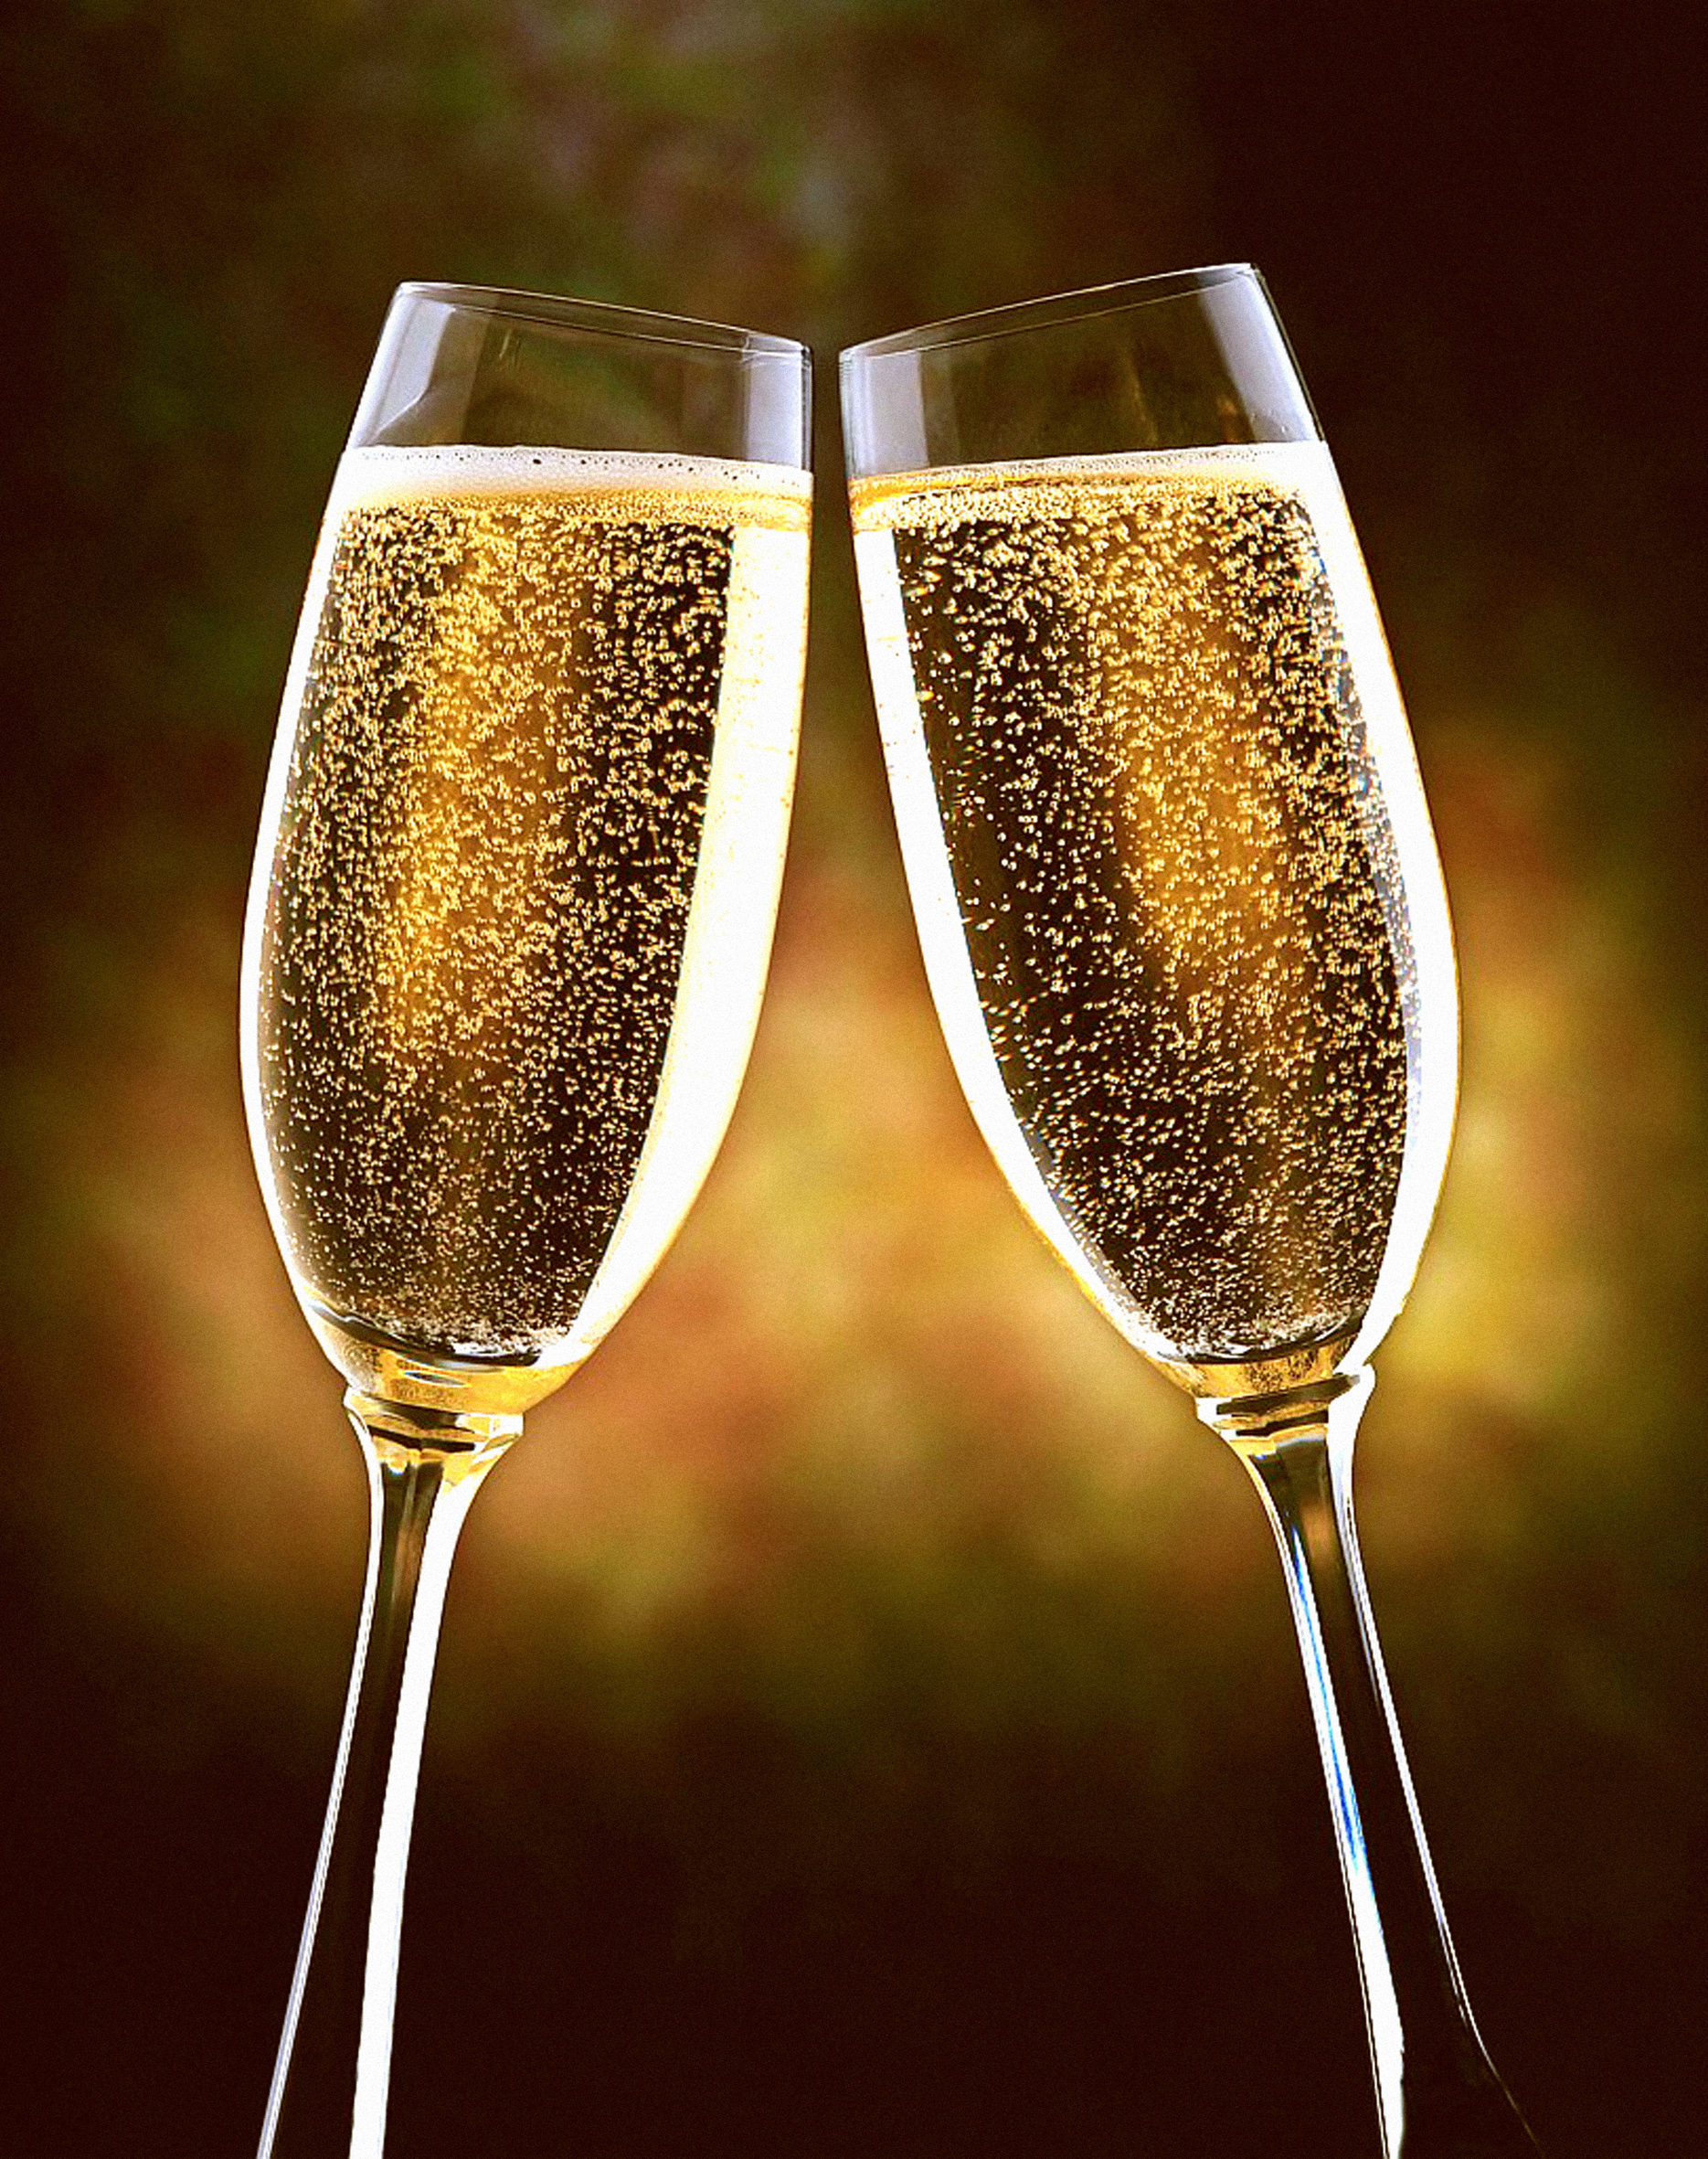 Celebrate Champagne Day with a Champagne Treasure Hunt